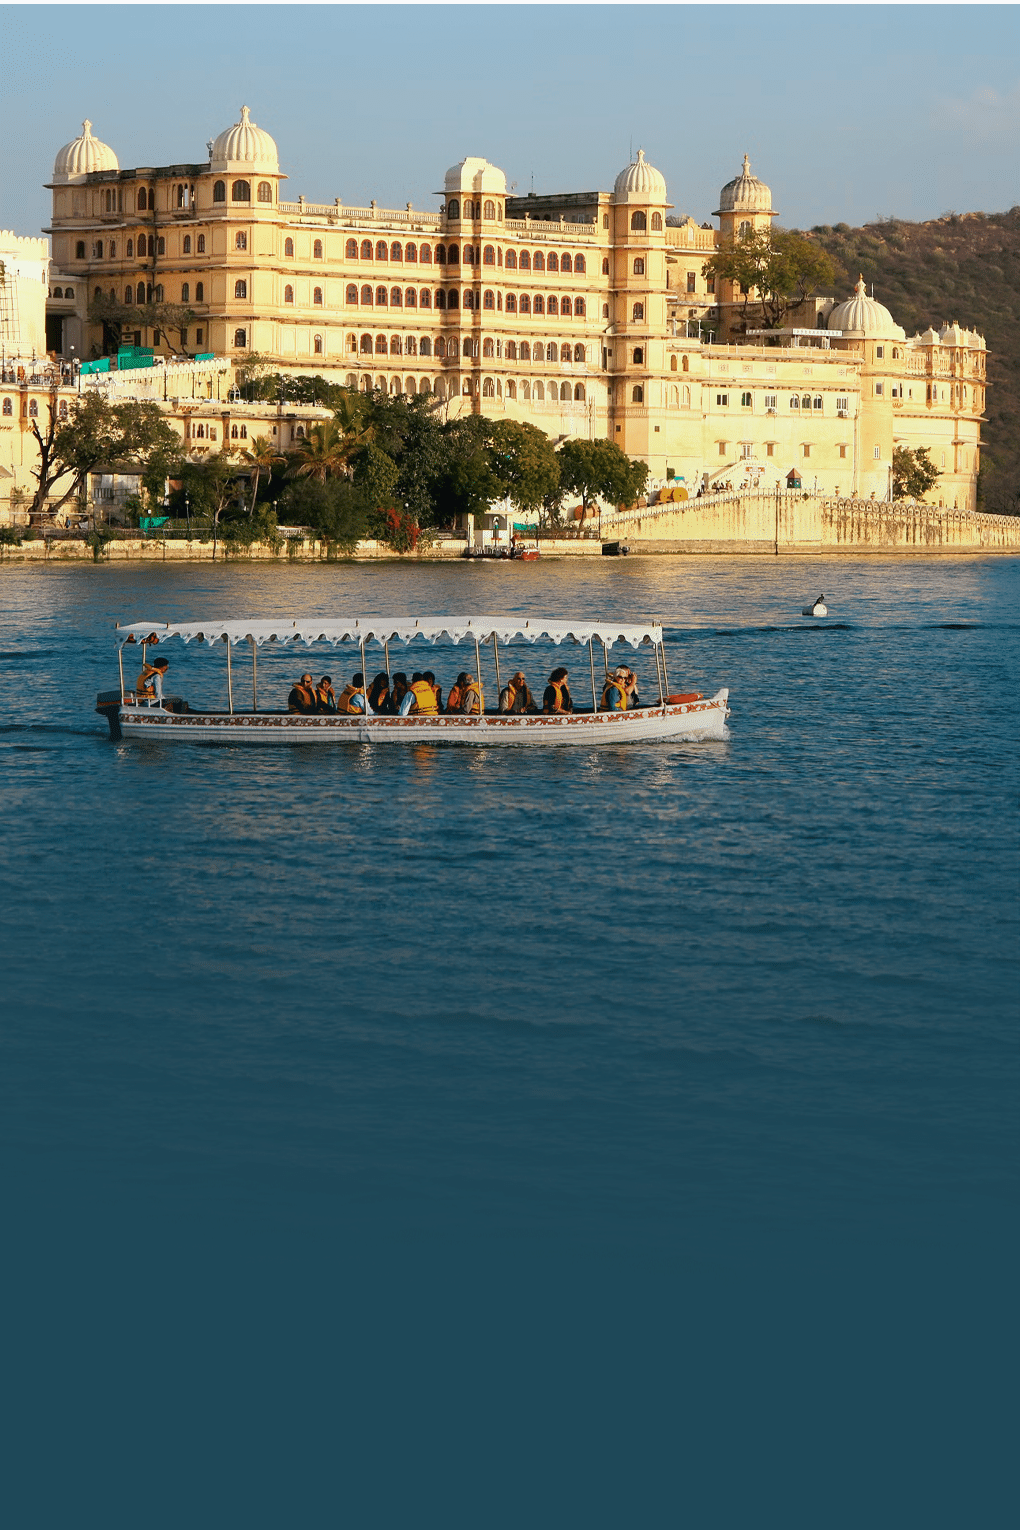 Rajasthan Vacation | FREE Lake Pichola Boat Ride with Photoshoot